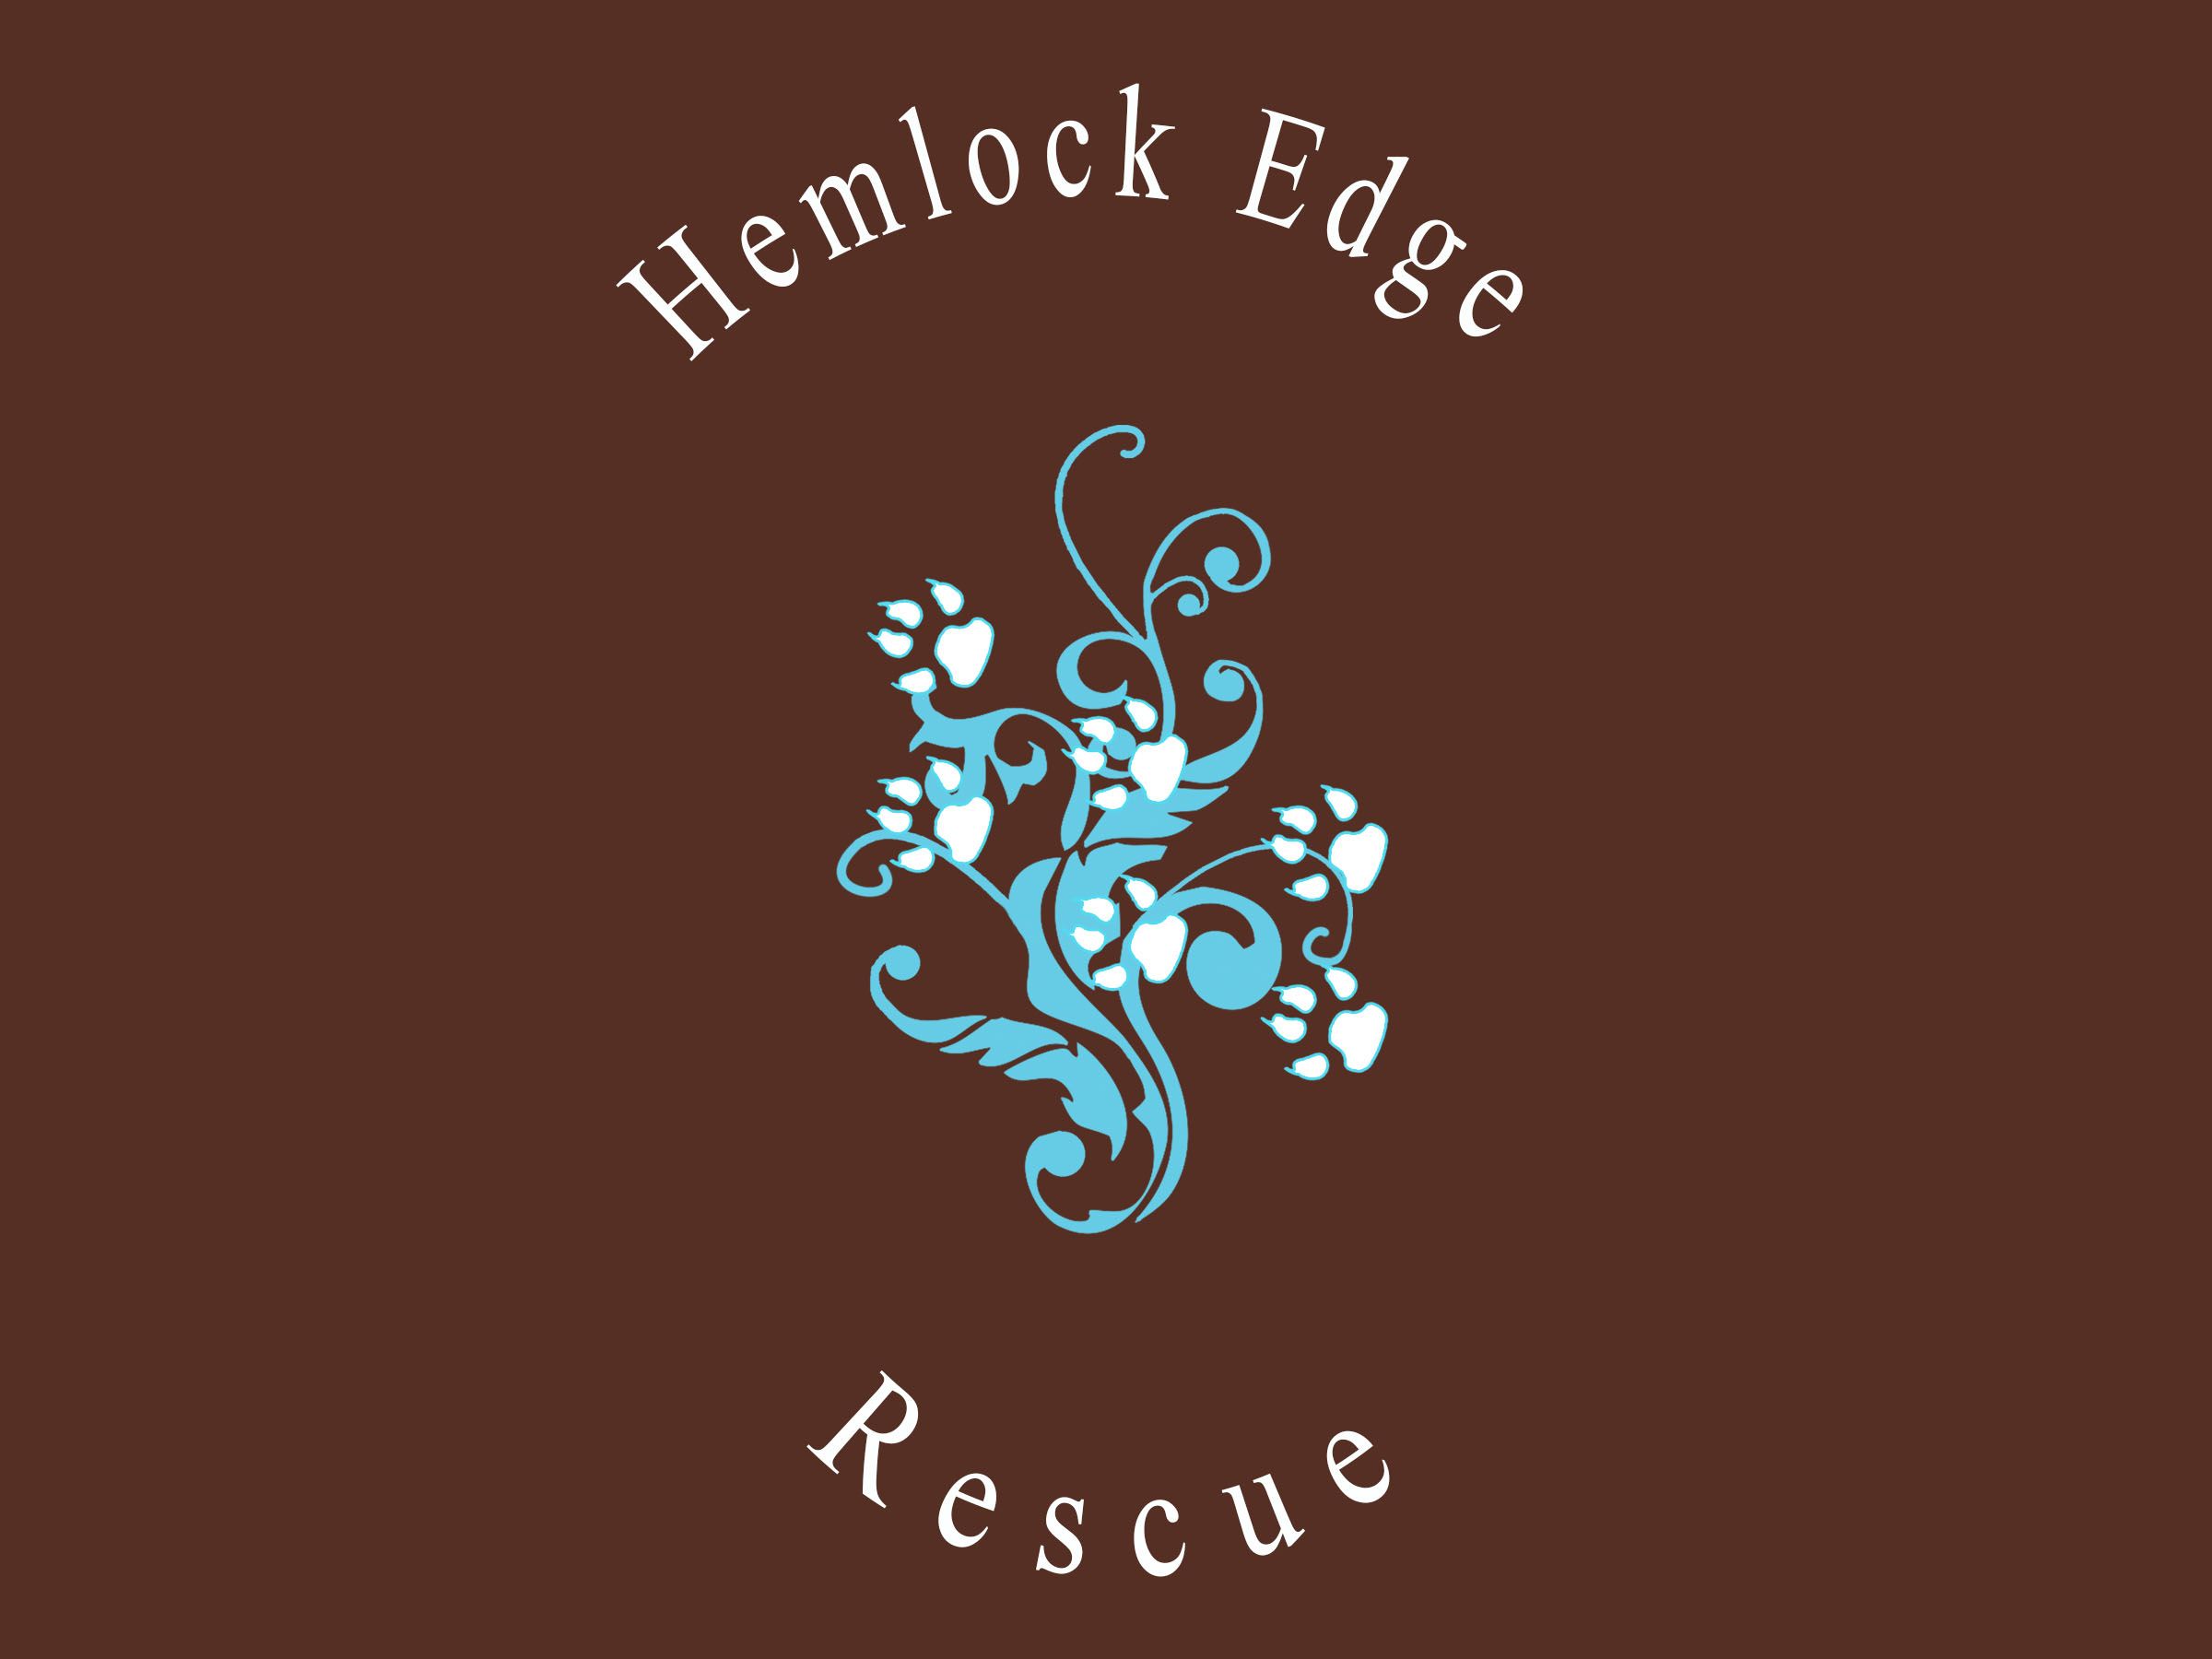 Hemlock Edge Rescue